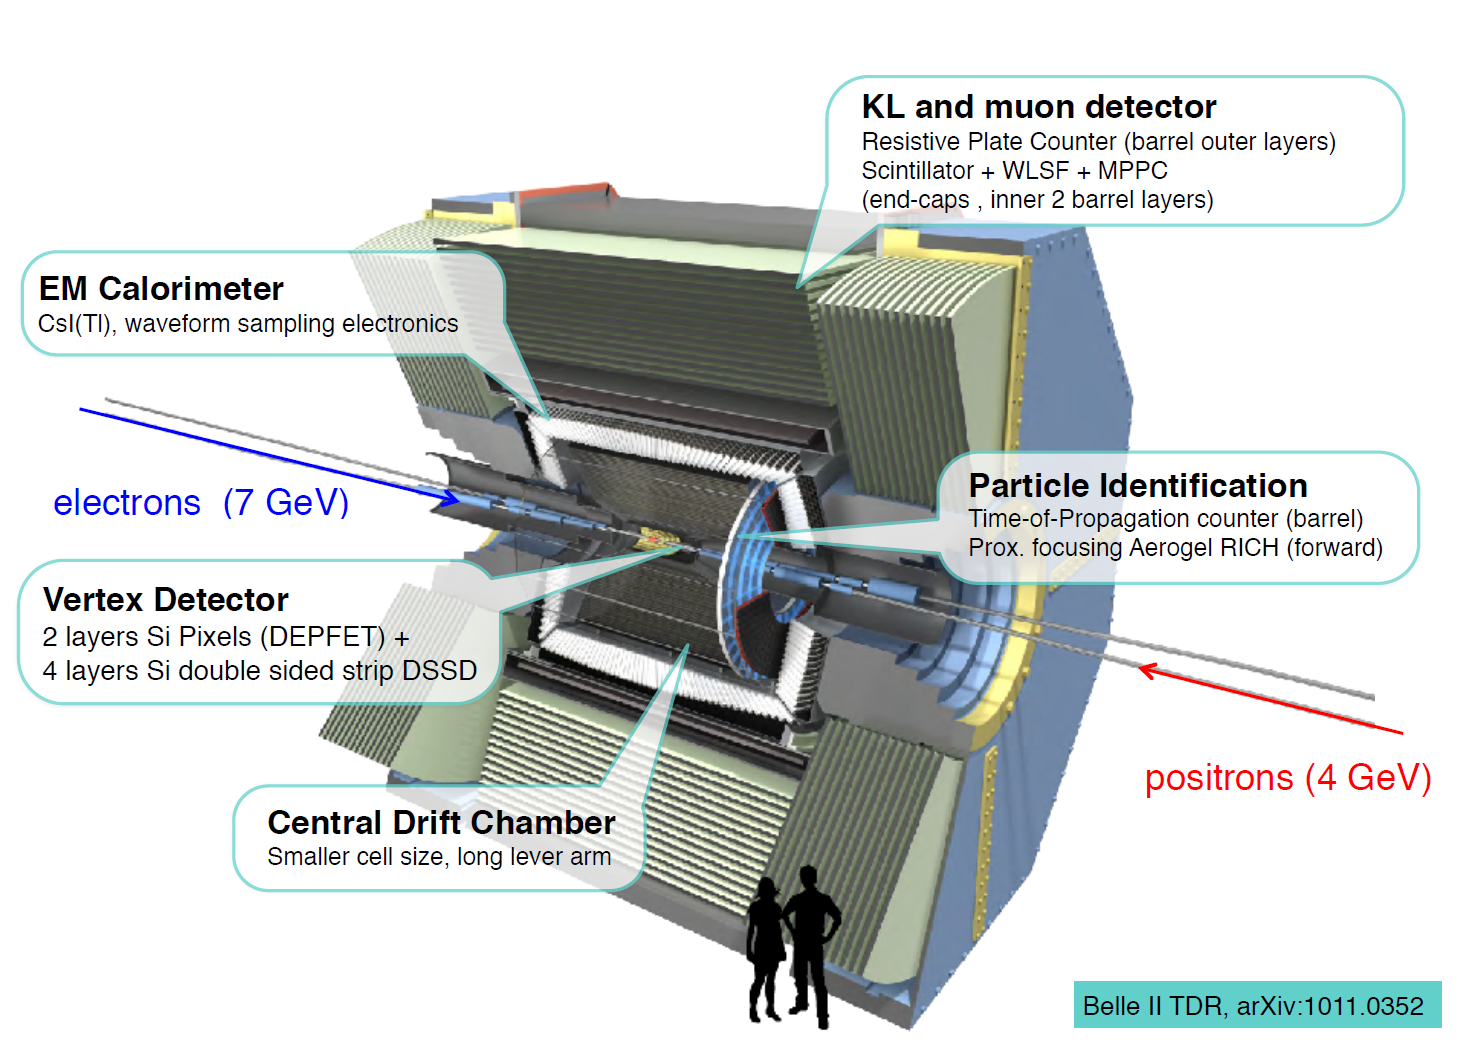 The Belle II detector consists of several sensitive purpose-built subdetectors. 